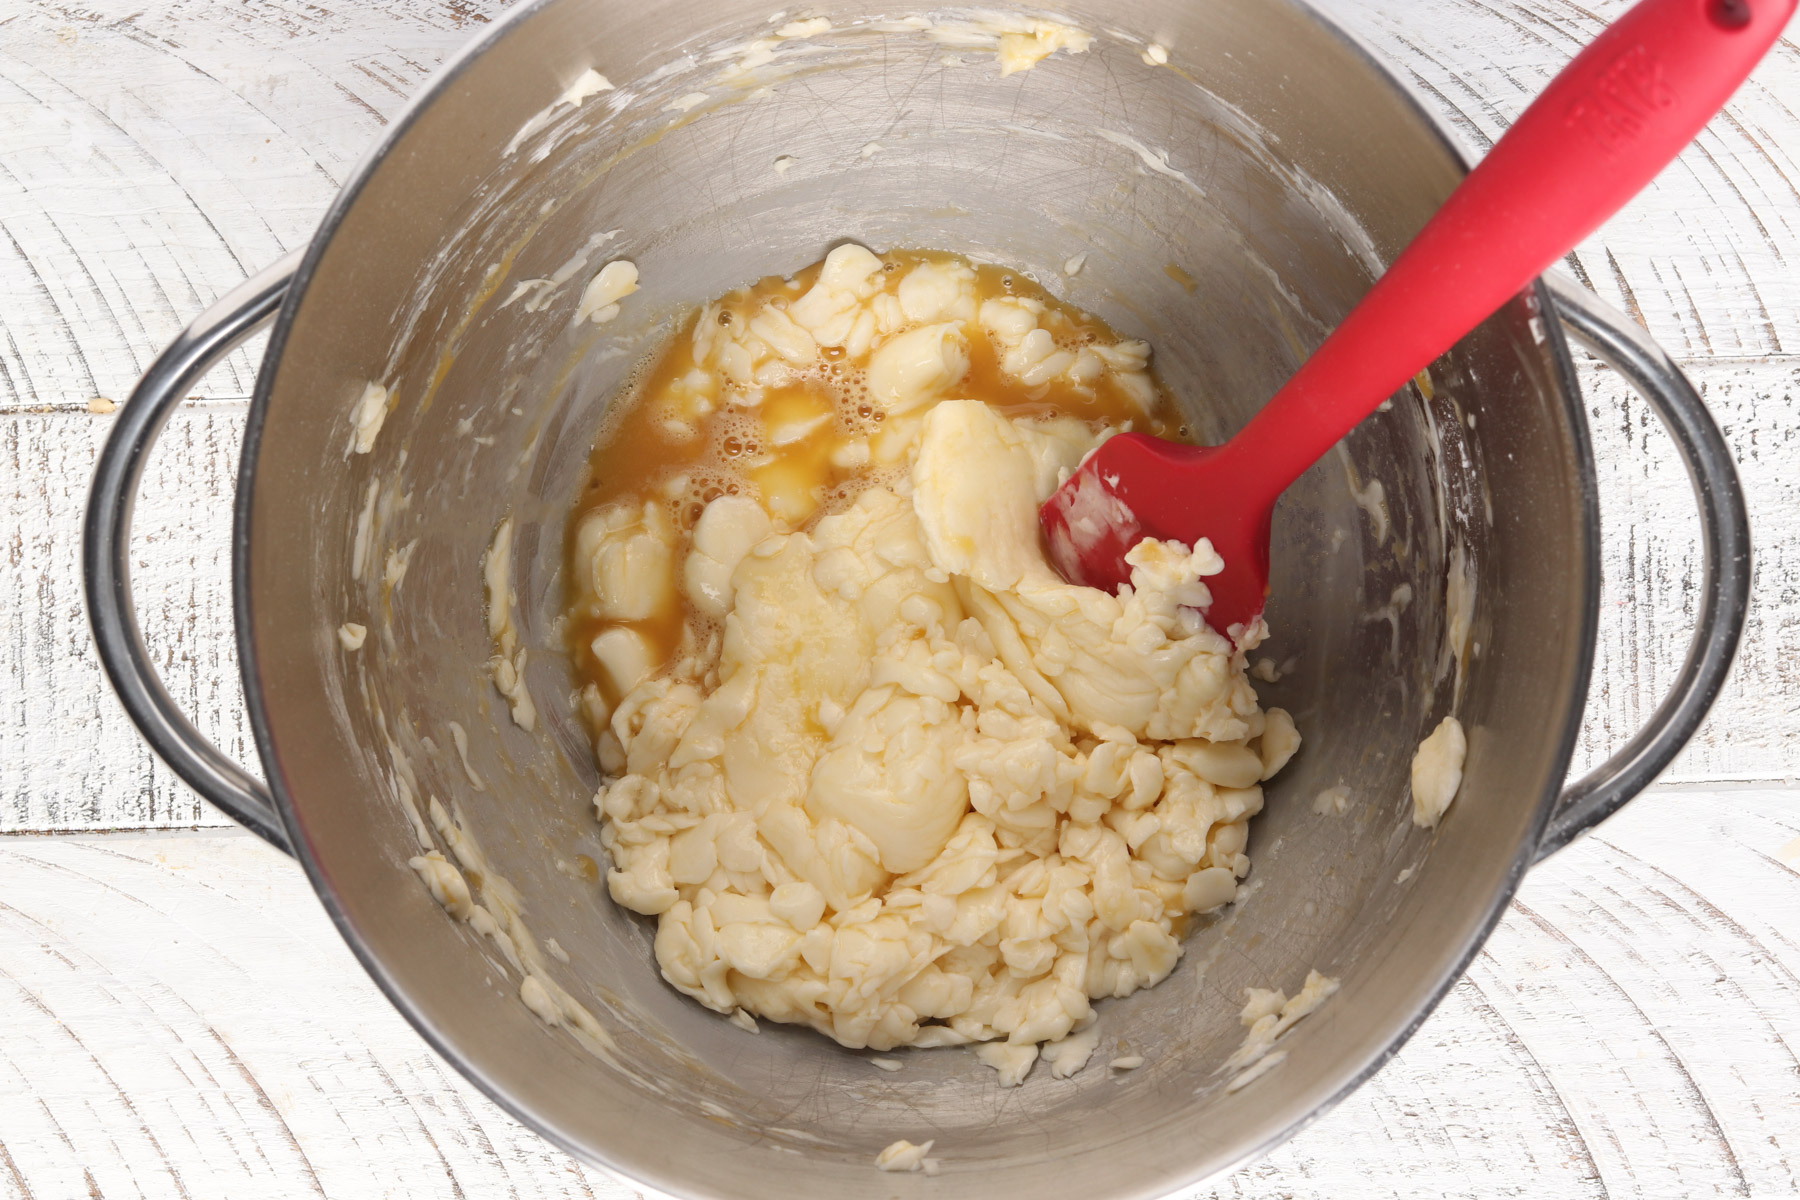 Step 2: No Spread Sugar Cookies. Mix wet ingredients in mixer.